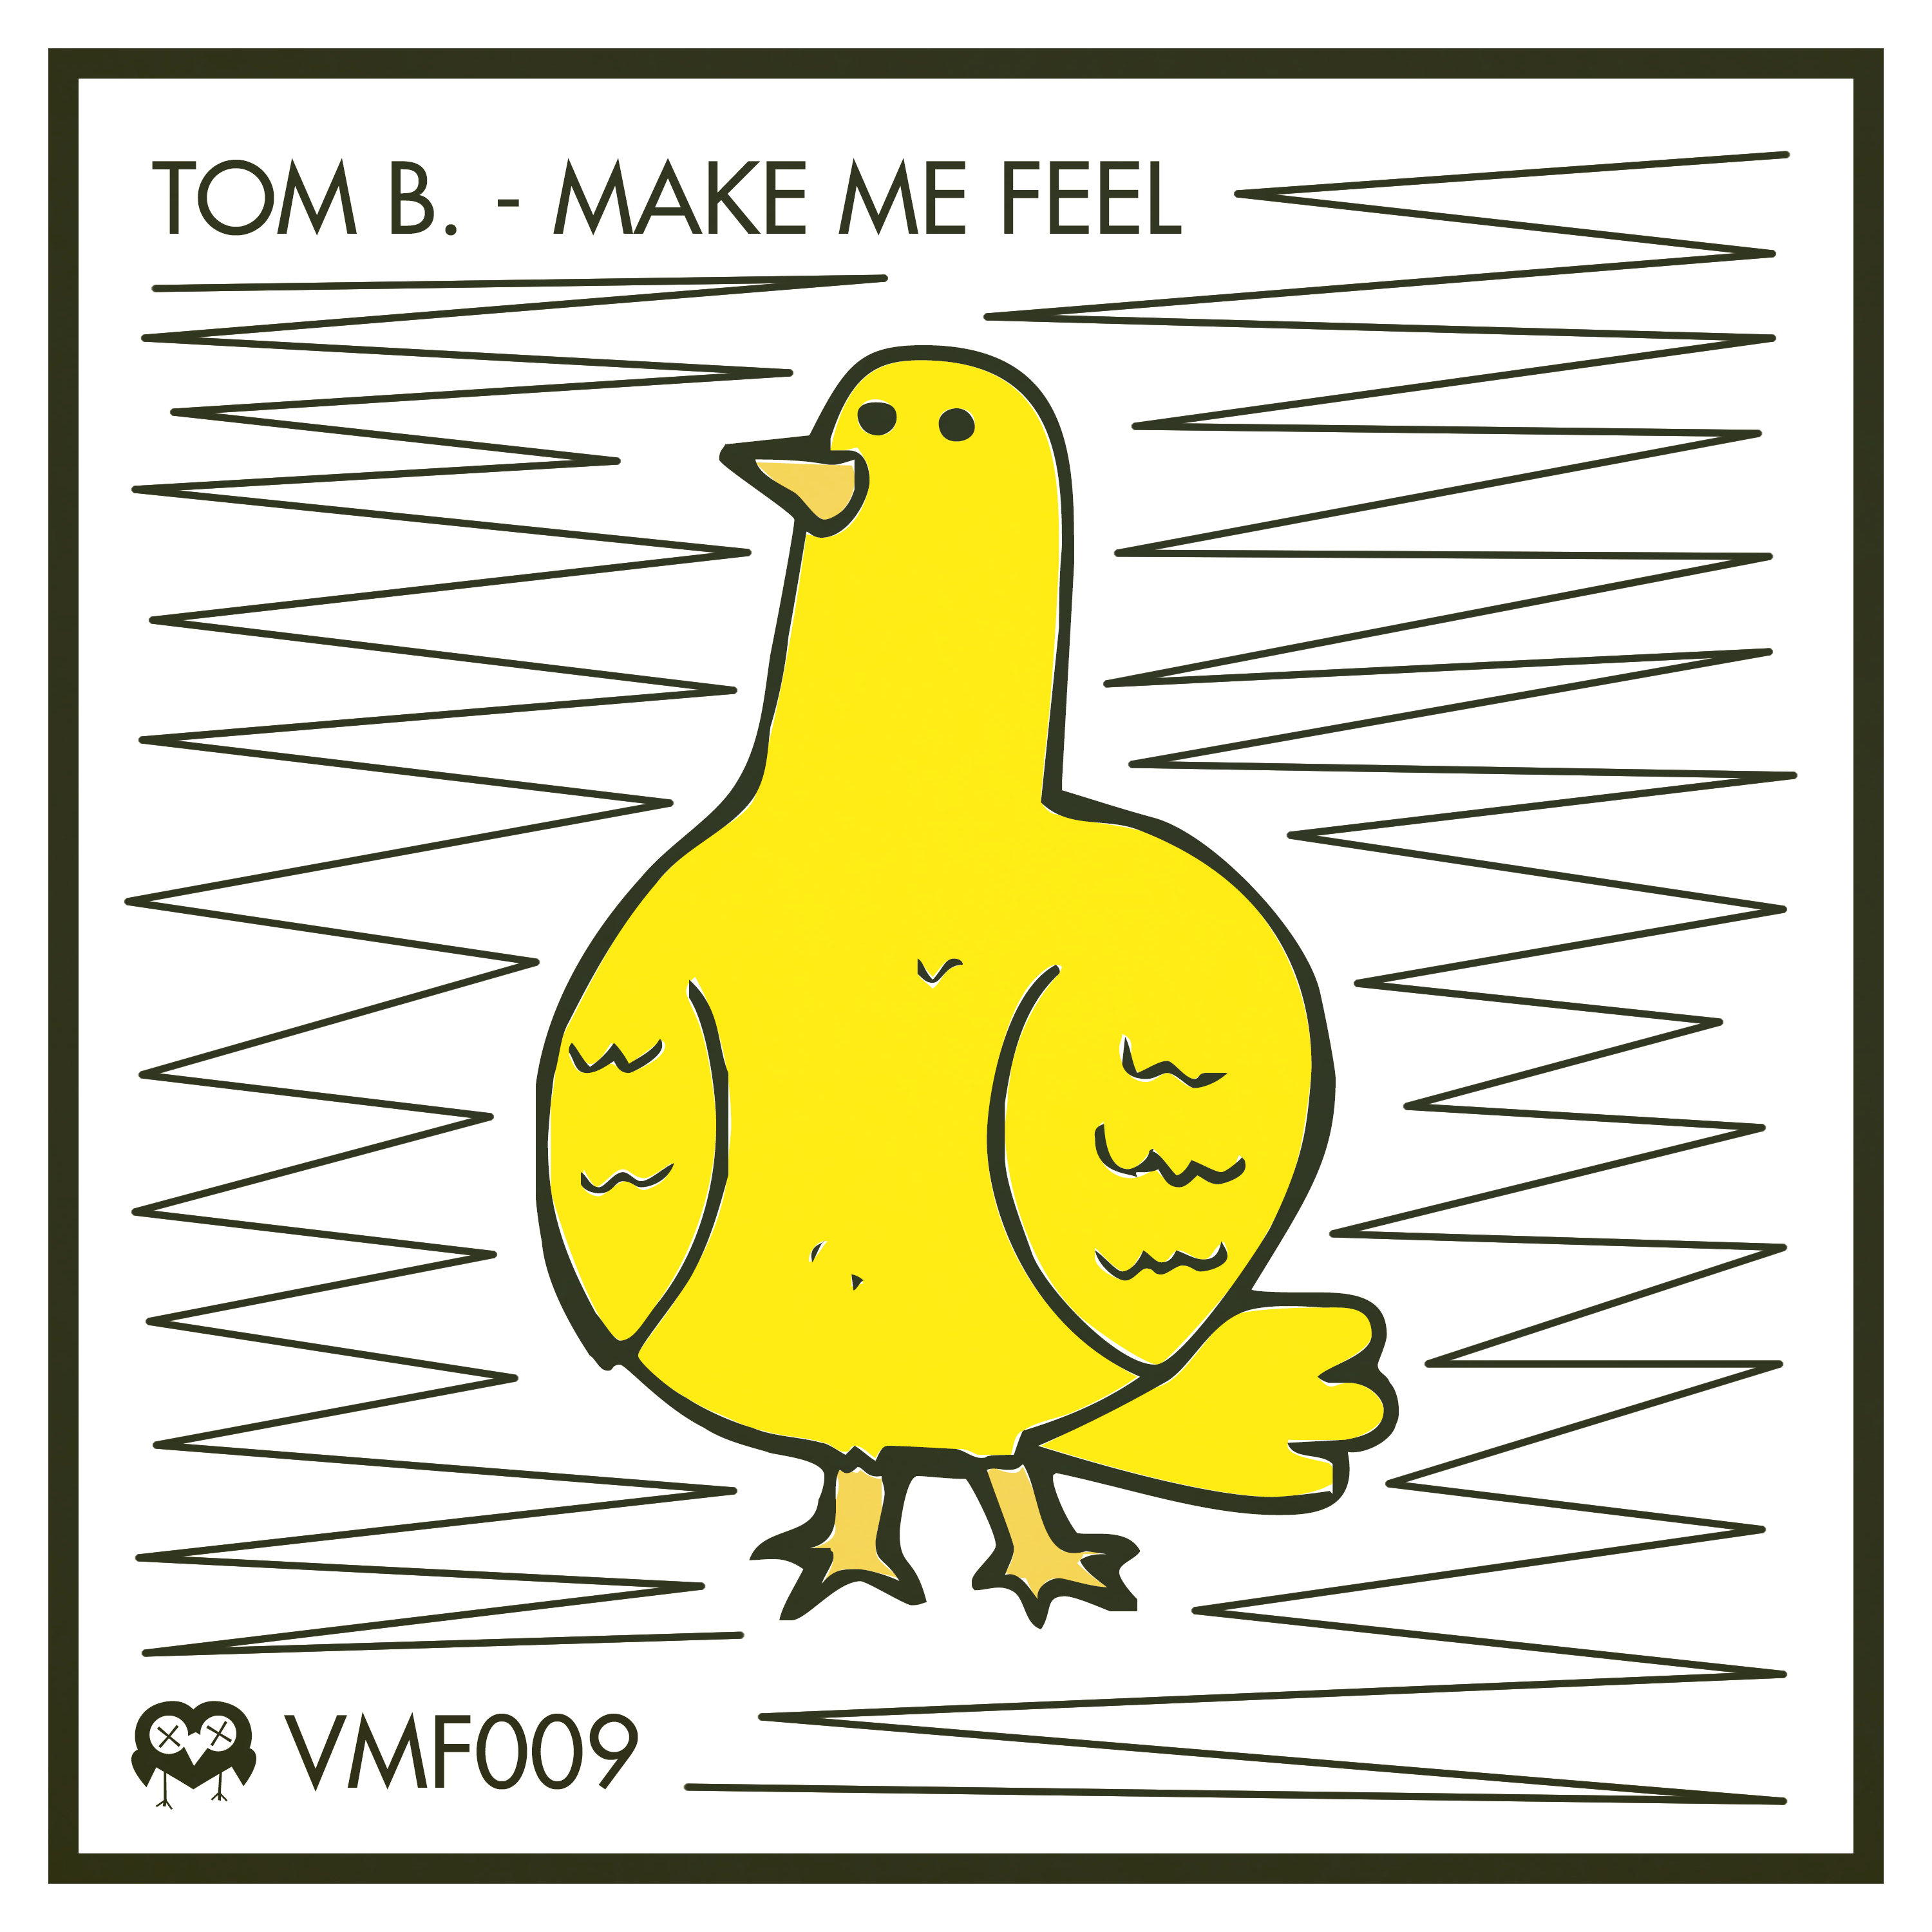 VMF 009 – Make Me Feel EP